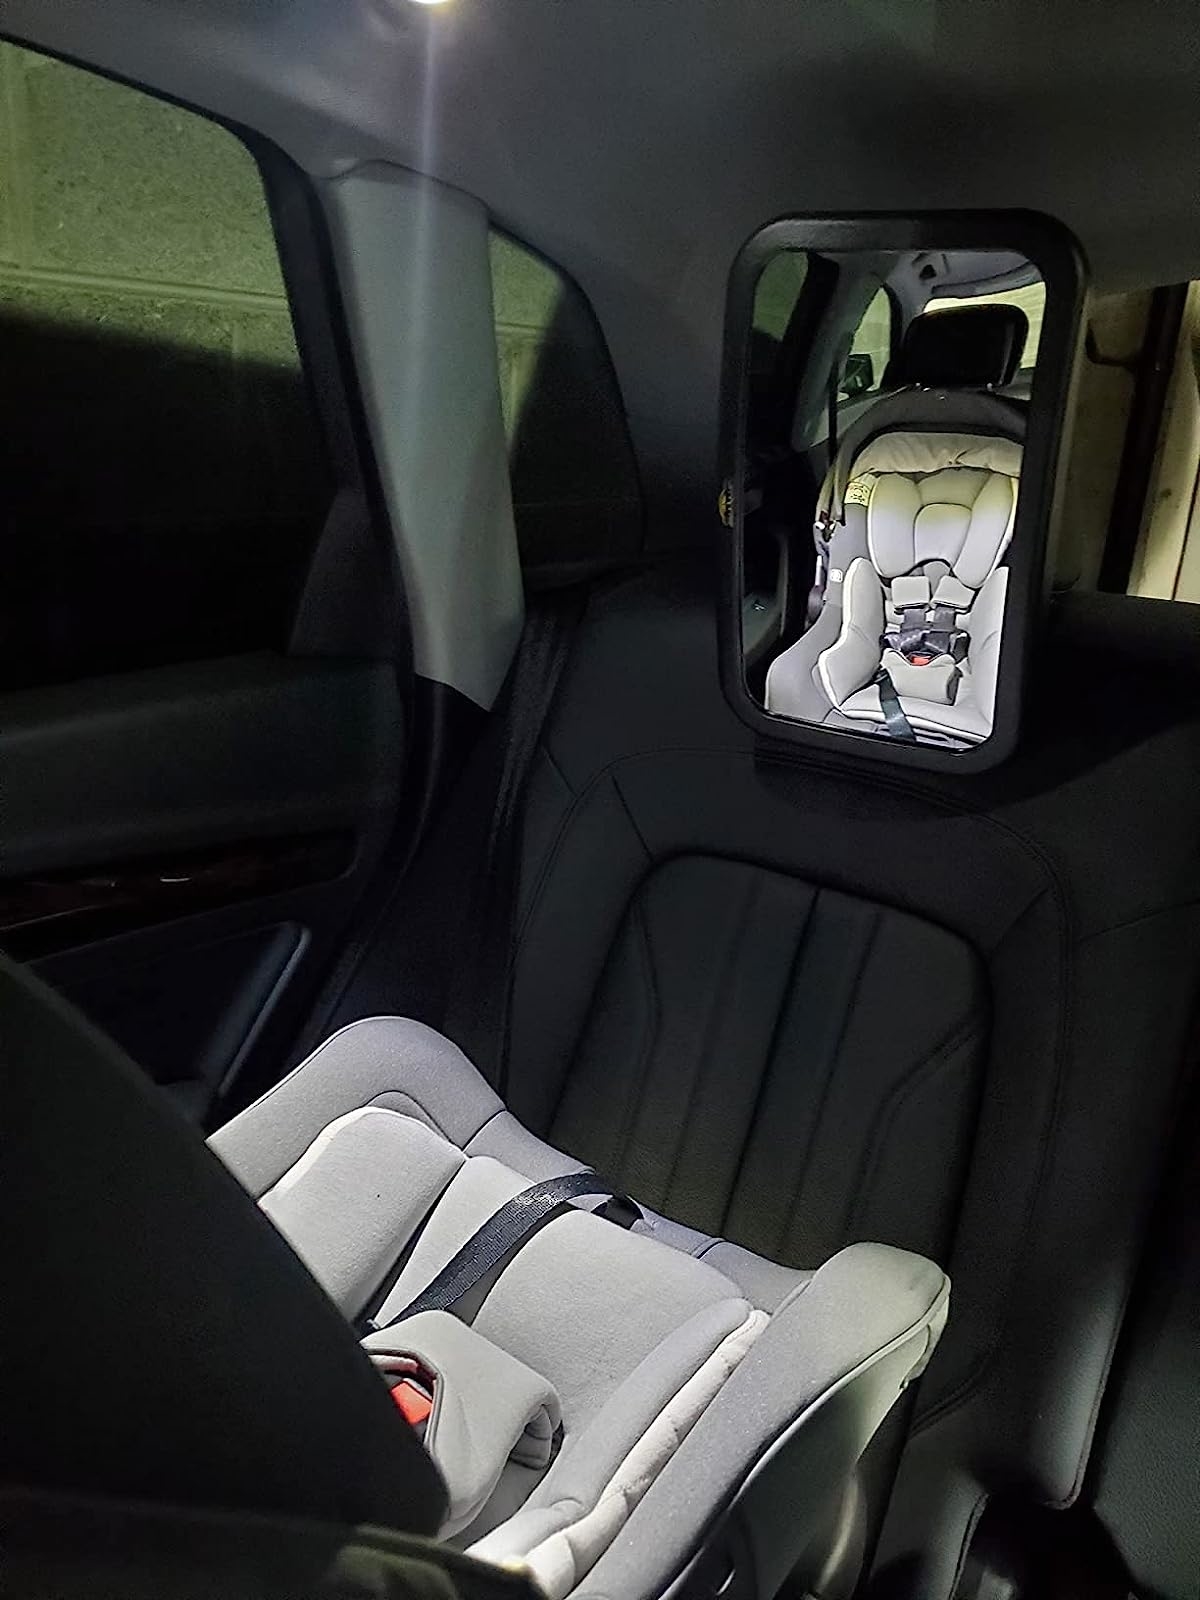 Mirror in car showing car seat